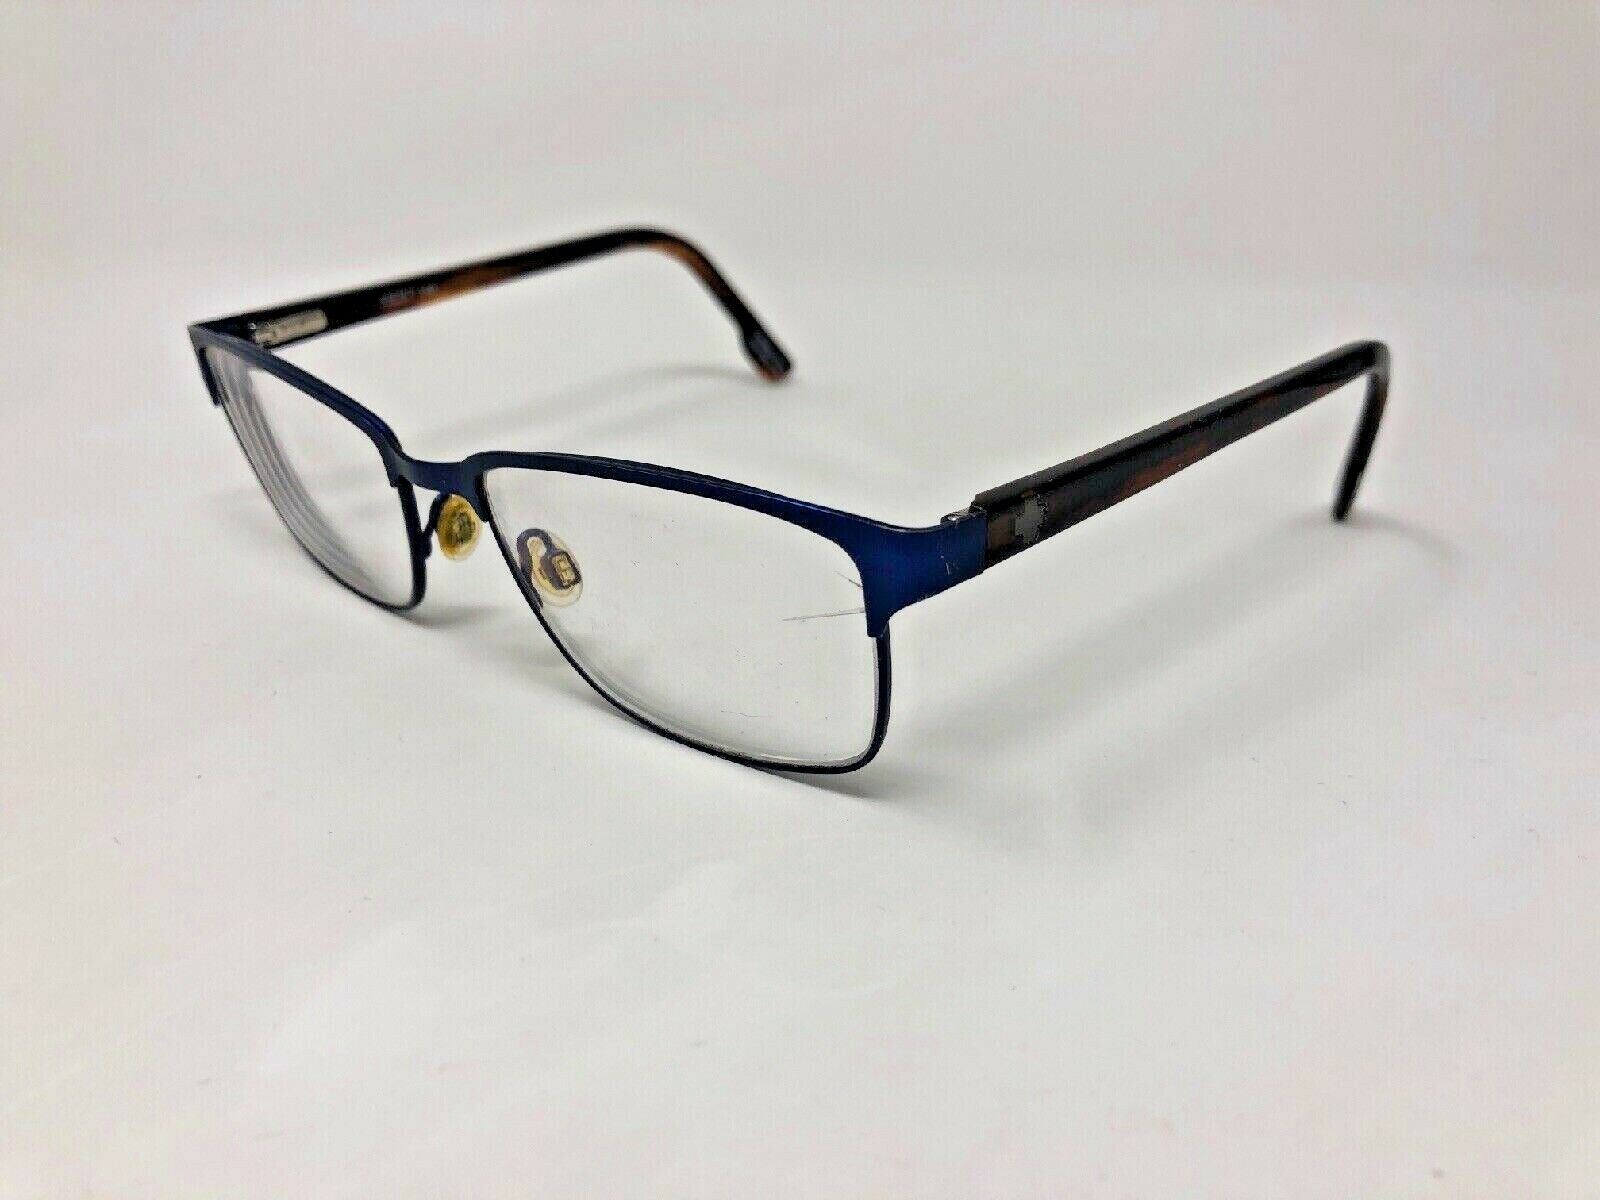 SPY+ OPTICS “BERNIE” Eyeglasses Frame 52-17-140 Blue Matte/Tortoise O588